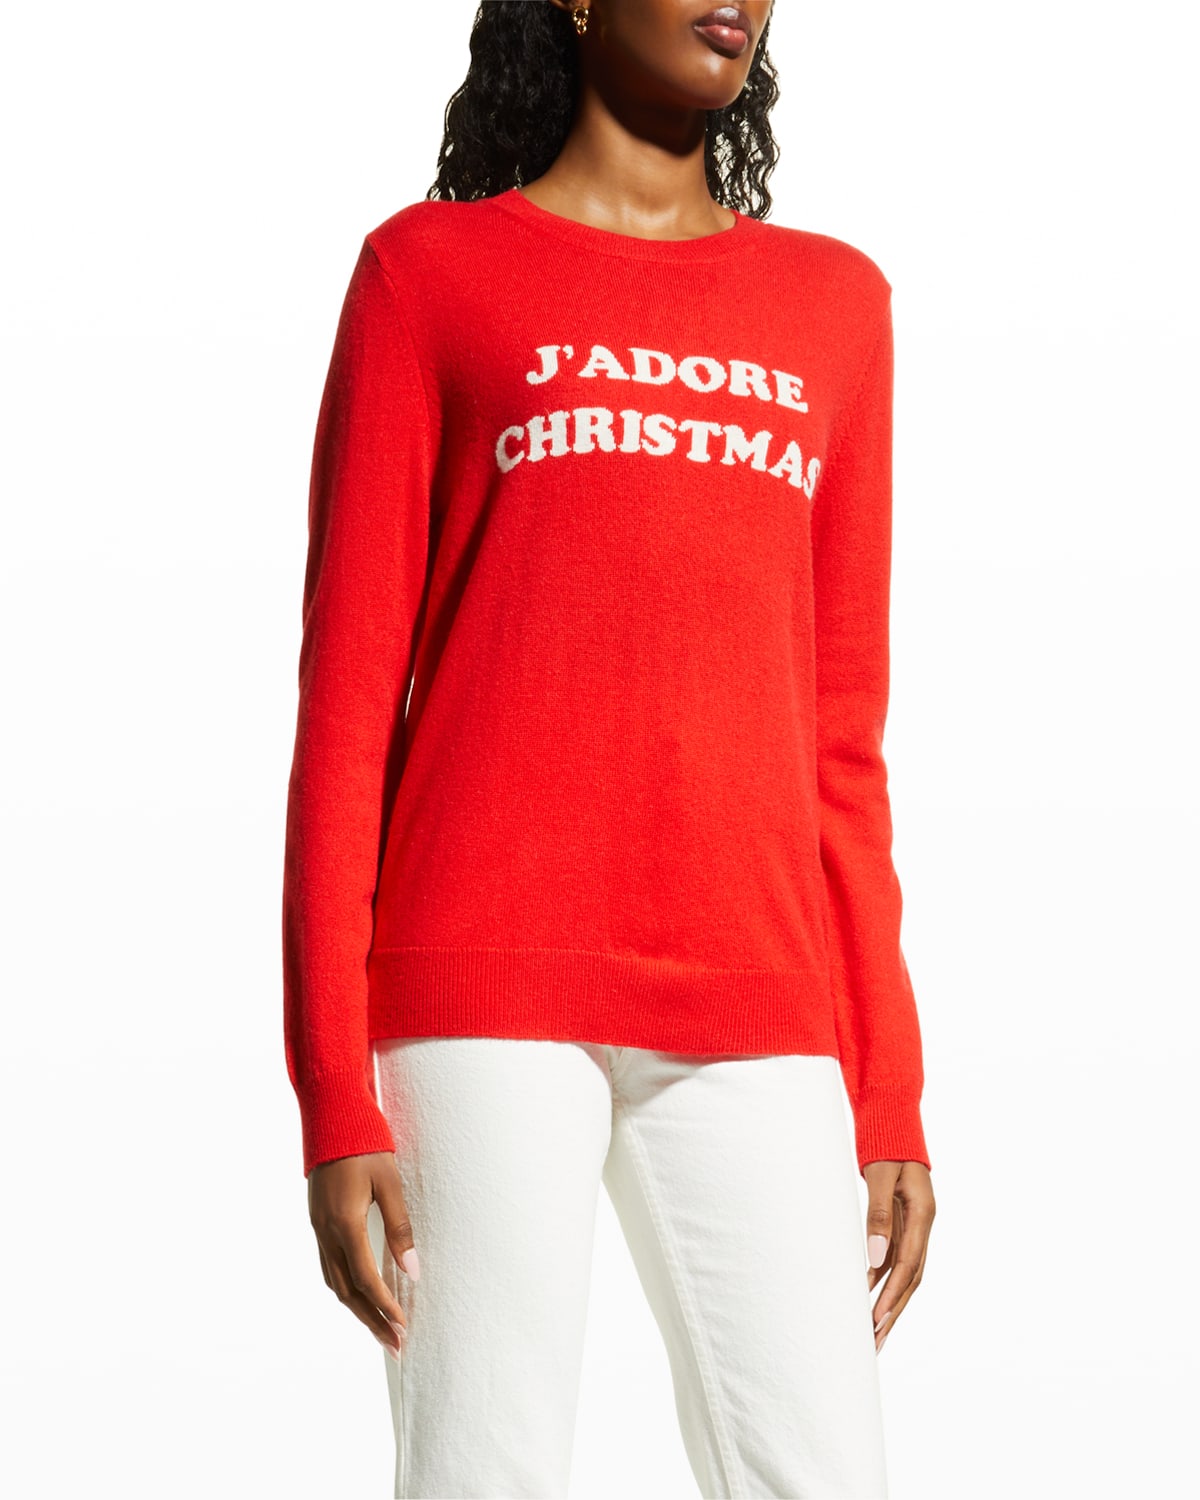 J'Adore Christmas Sweater | Neiman Marcus